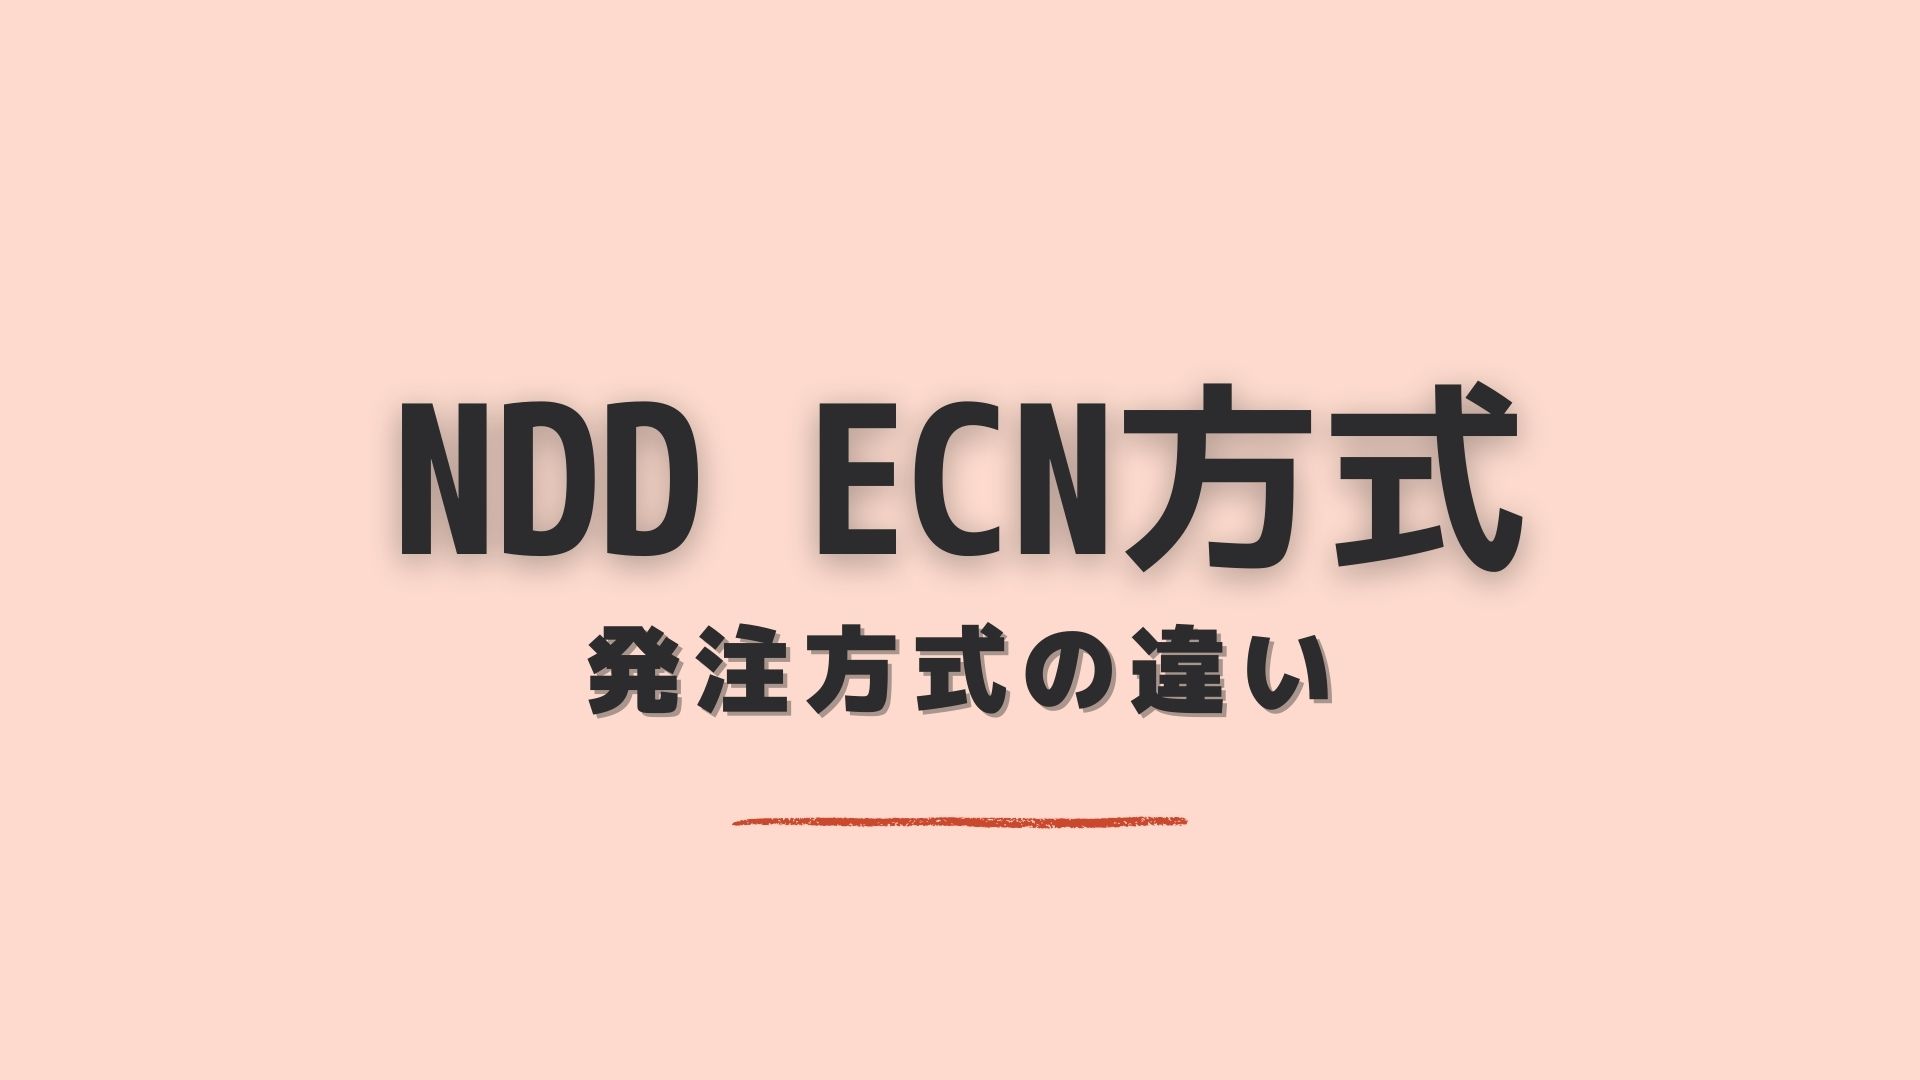 ndd-ecn-title